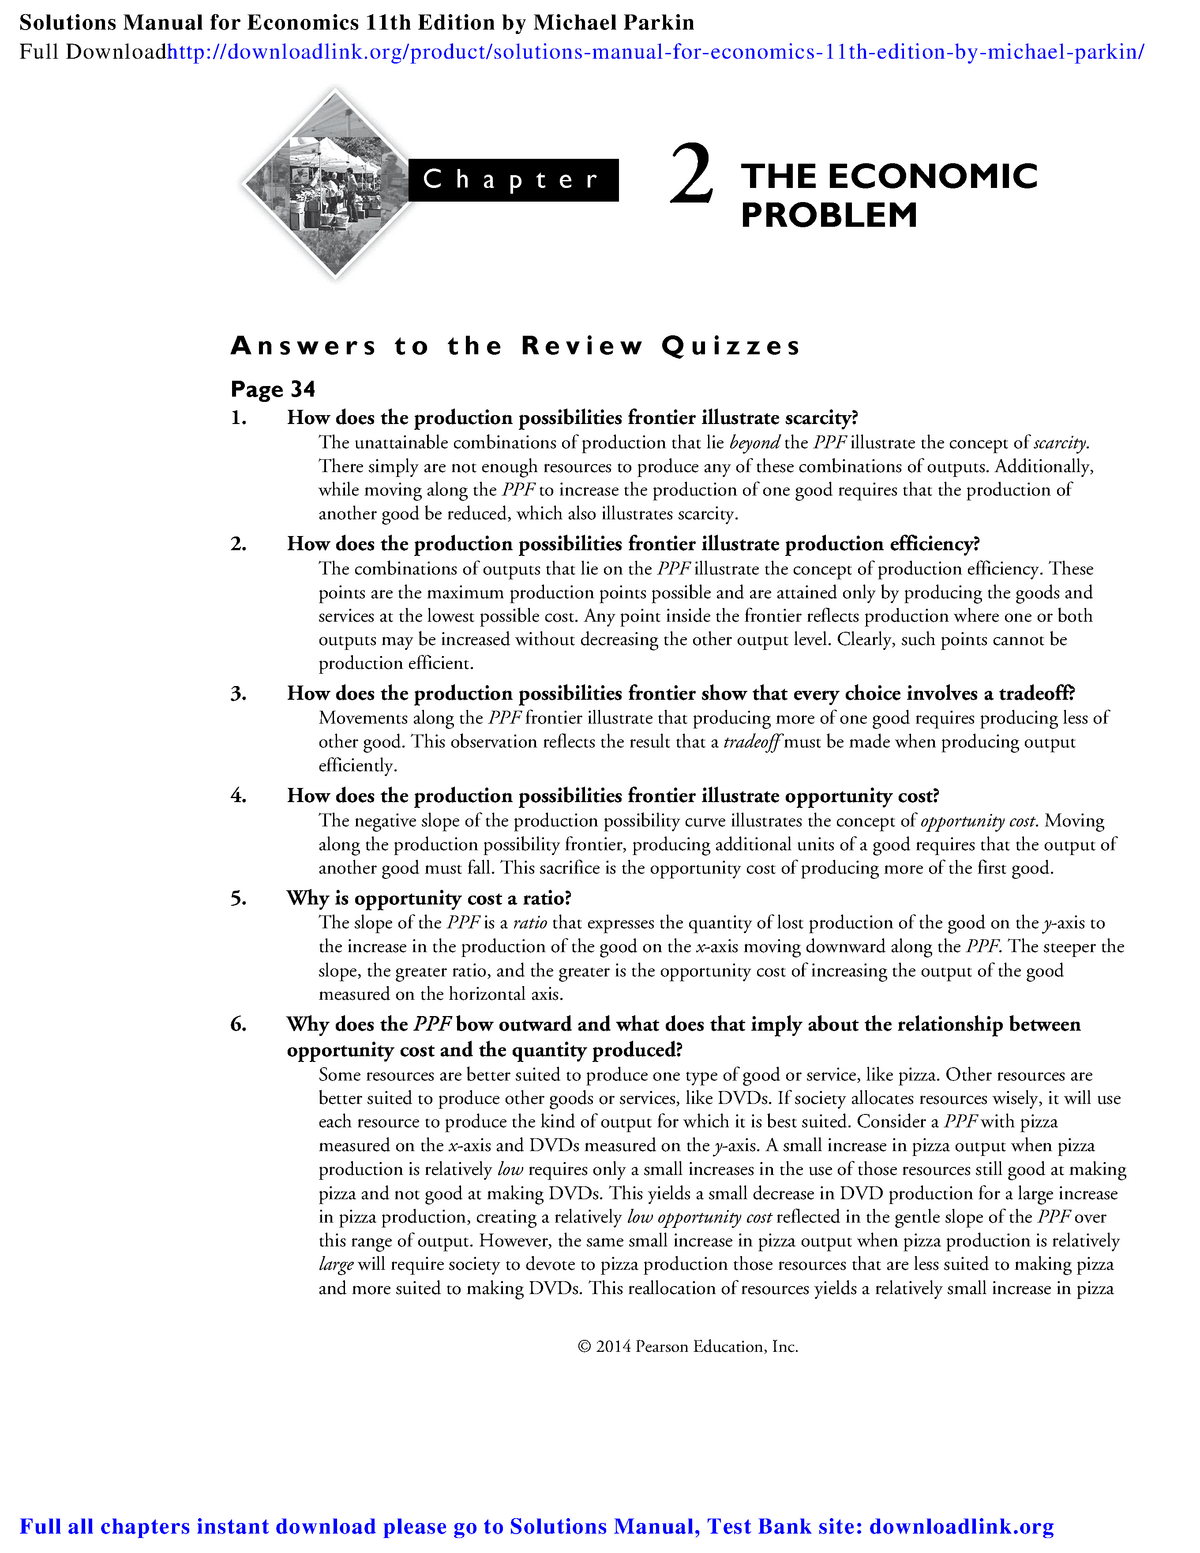 michael parkin economics 11th edition pdf